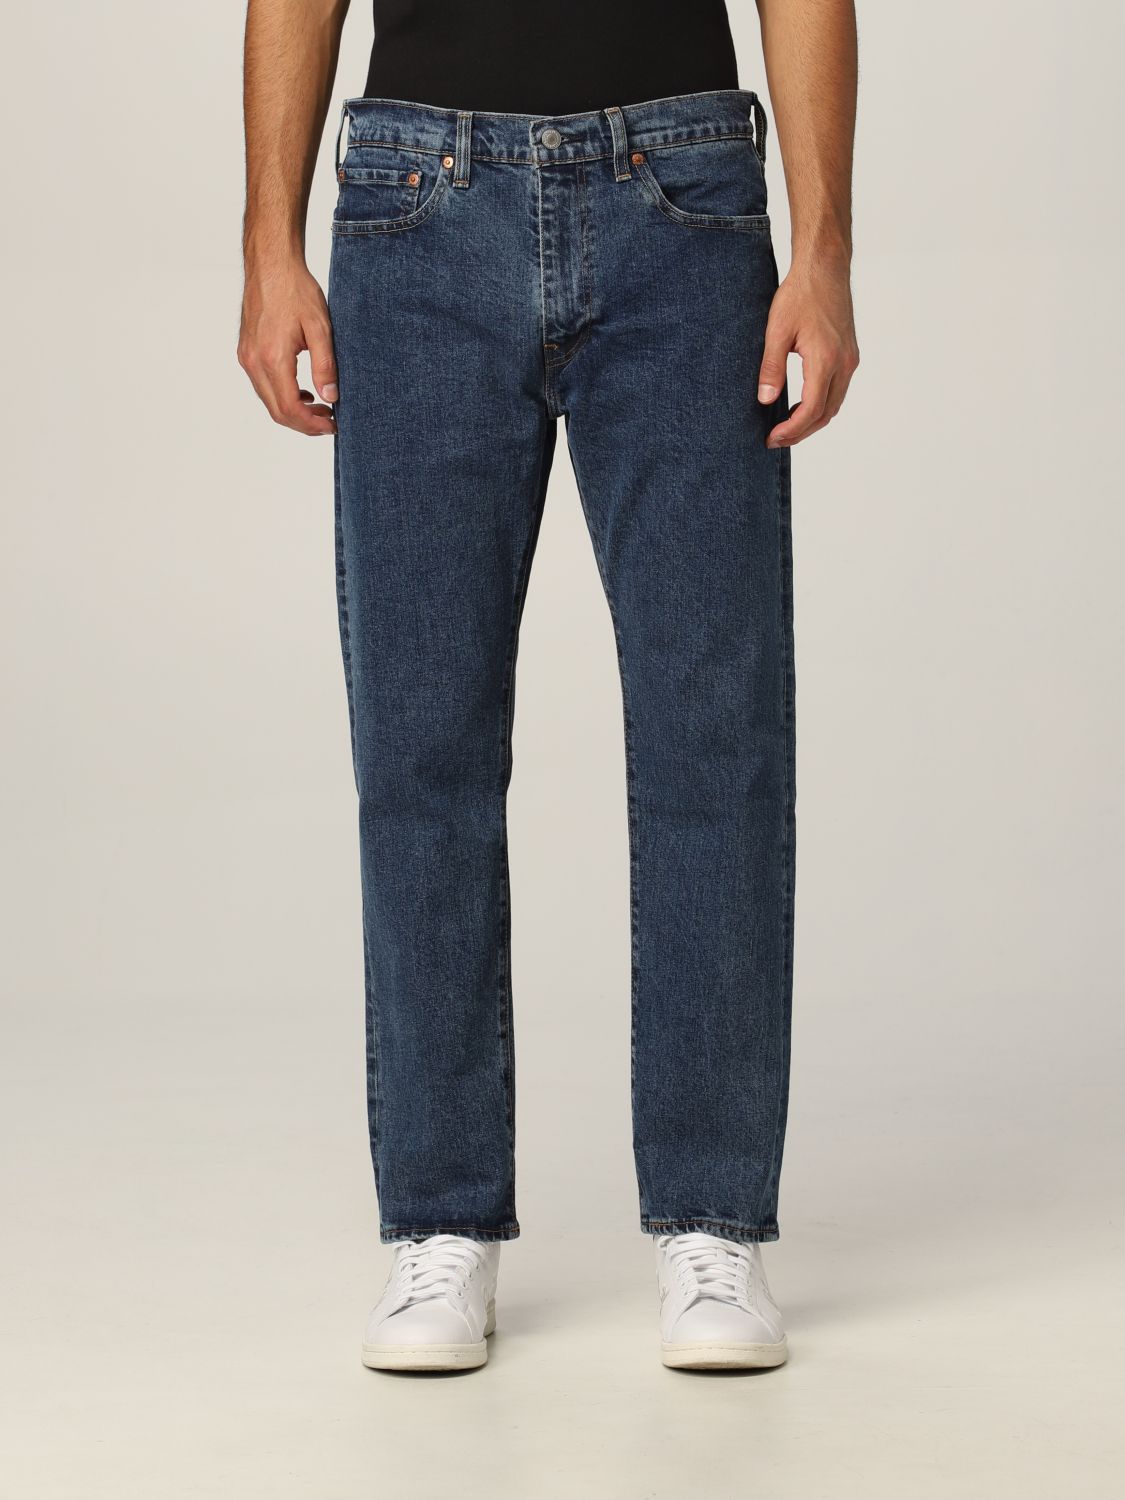 LEVI'S: jeans for men - Denim | Levi's jeans 295070555 online on GIGLIO.COM